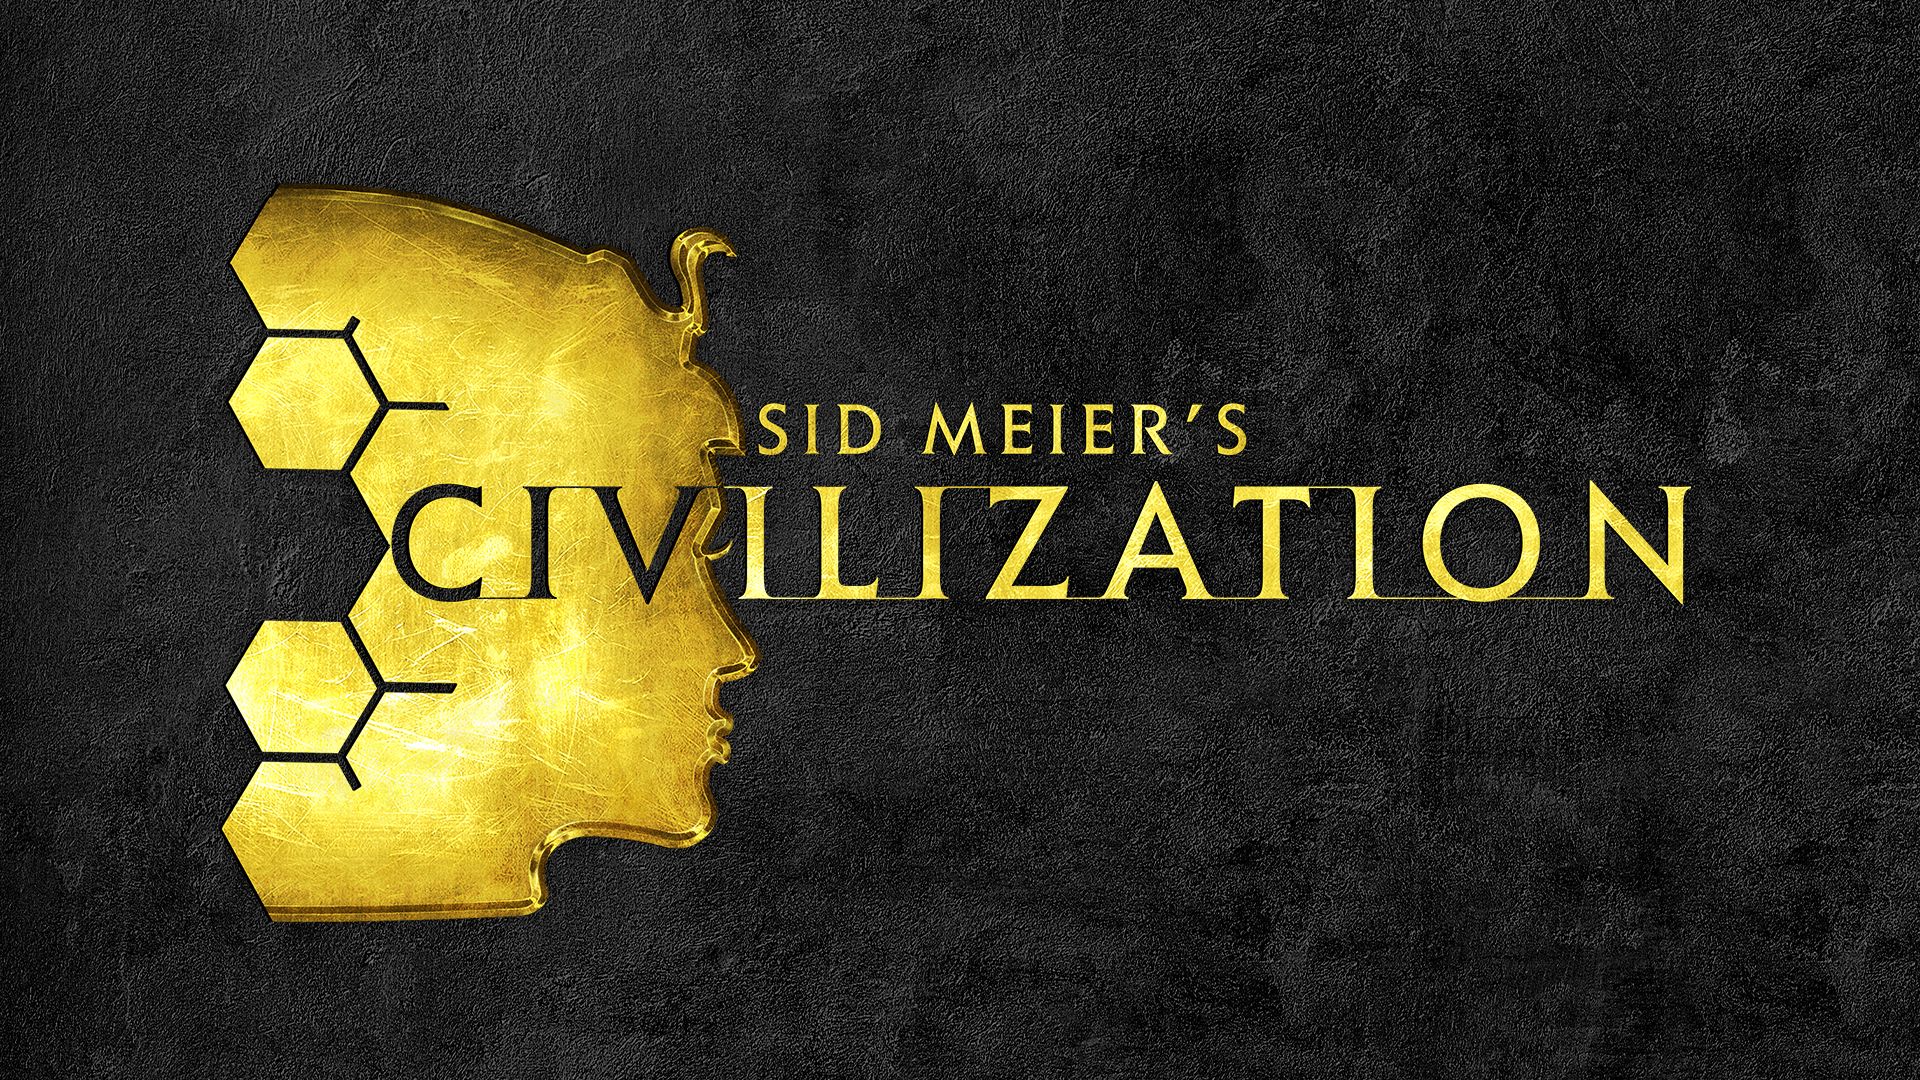 Civilization® VI – The Official Site, News